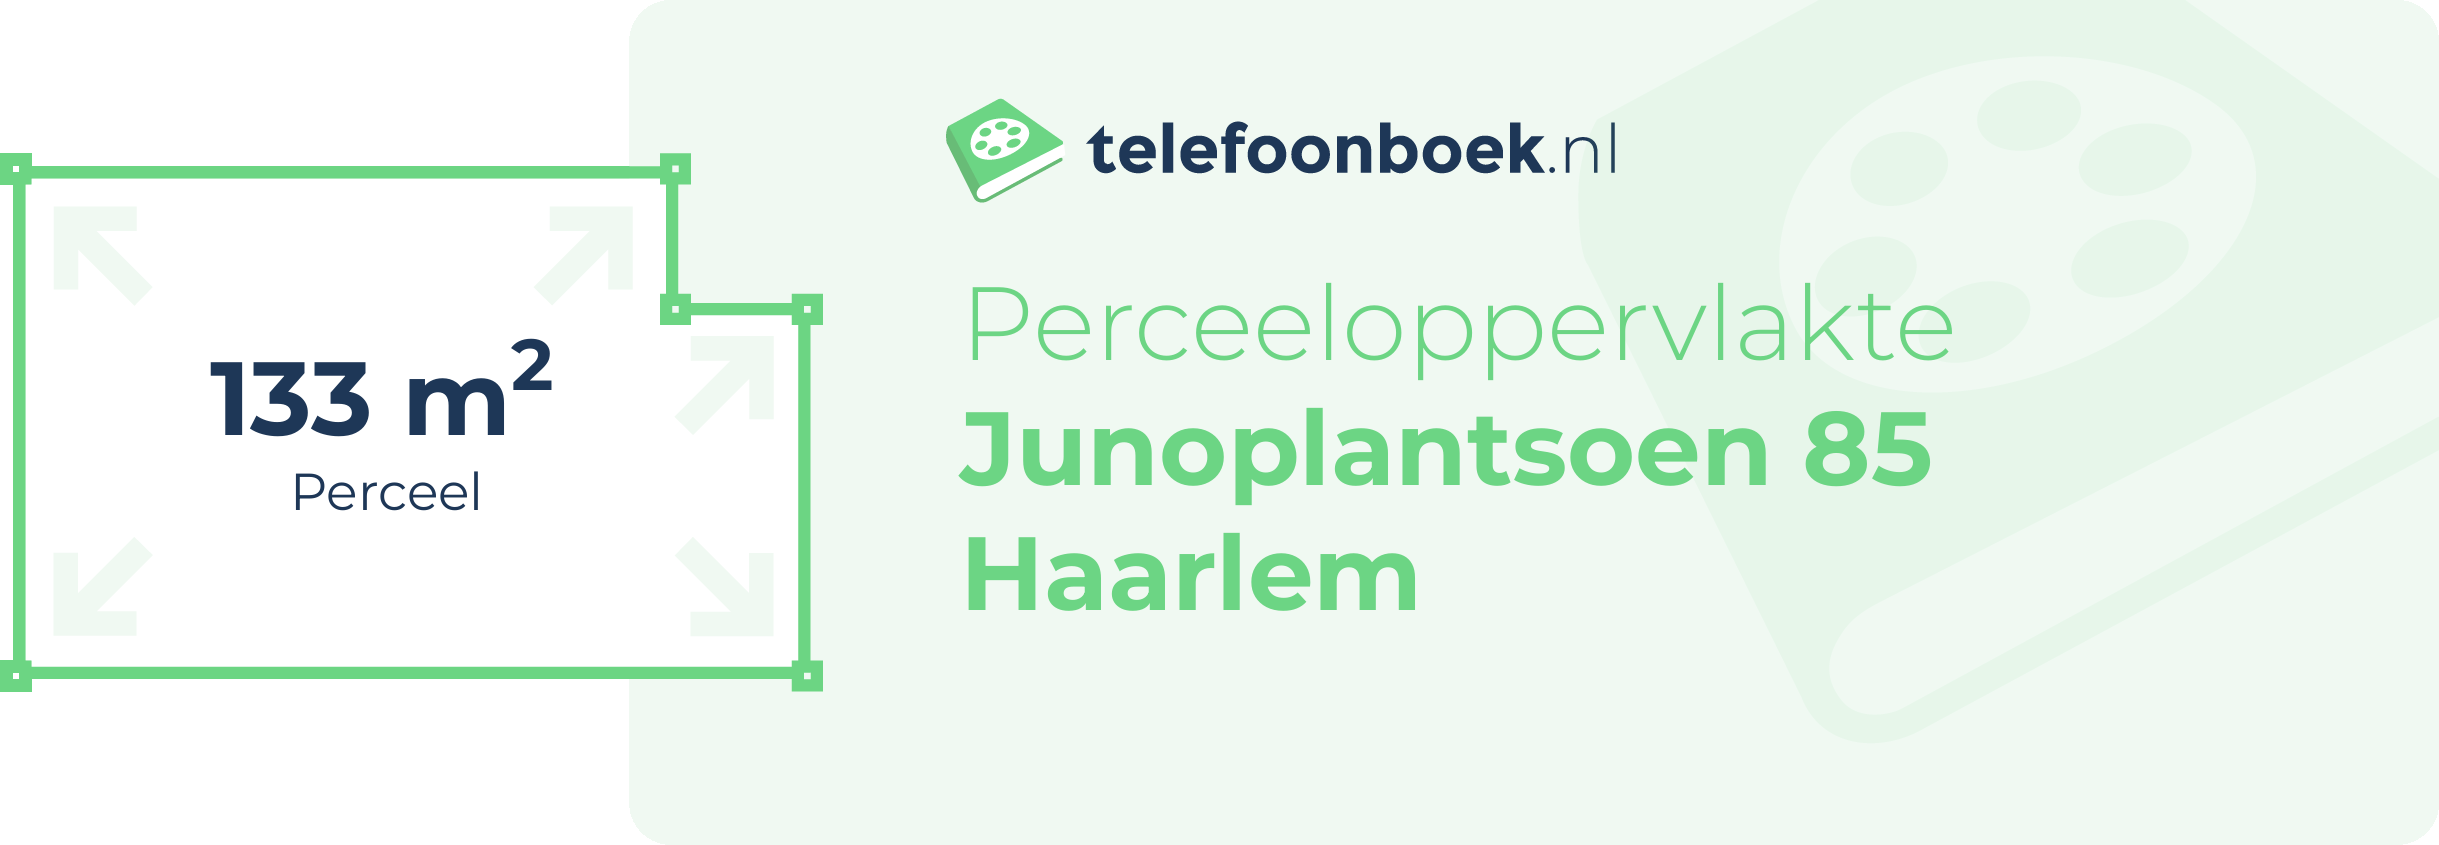 Perceeloppervlakte Junoplantsoen 85 Haarlem